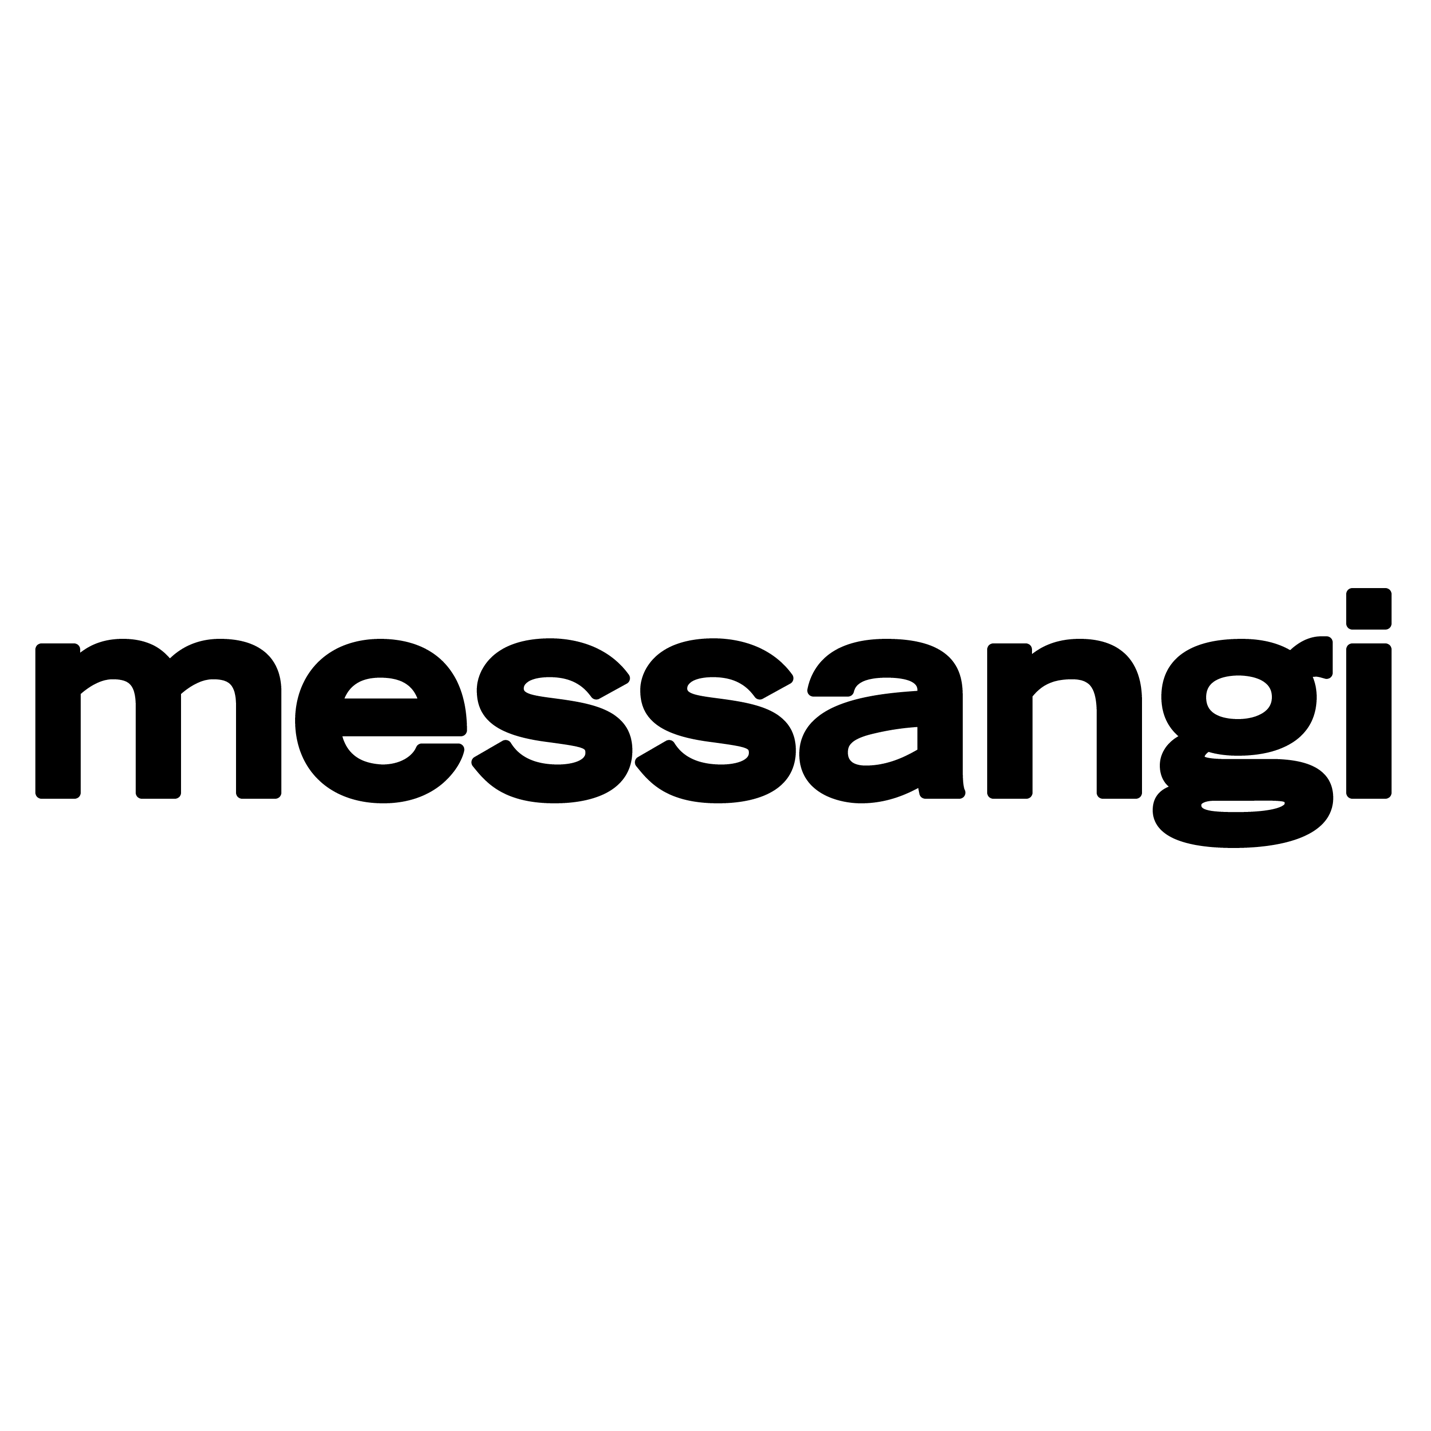 Messangi. Logo